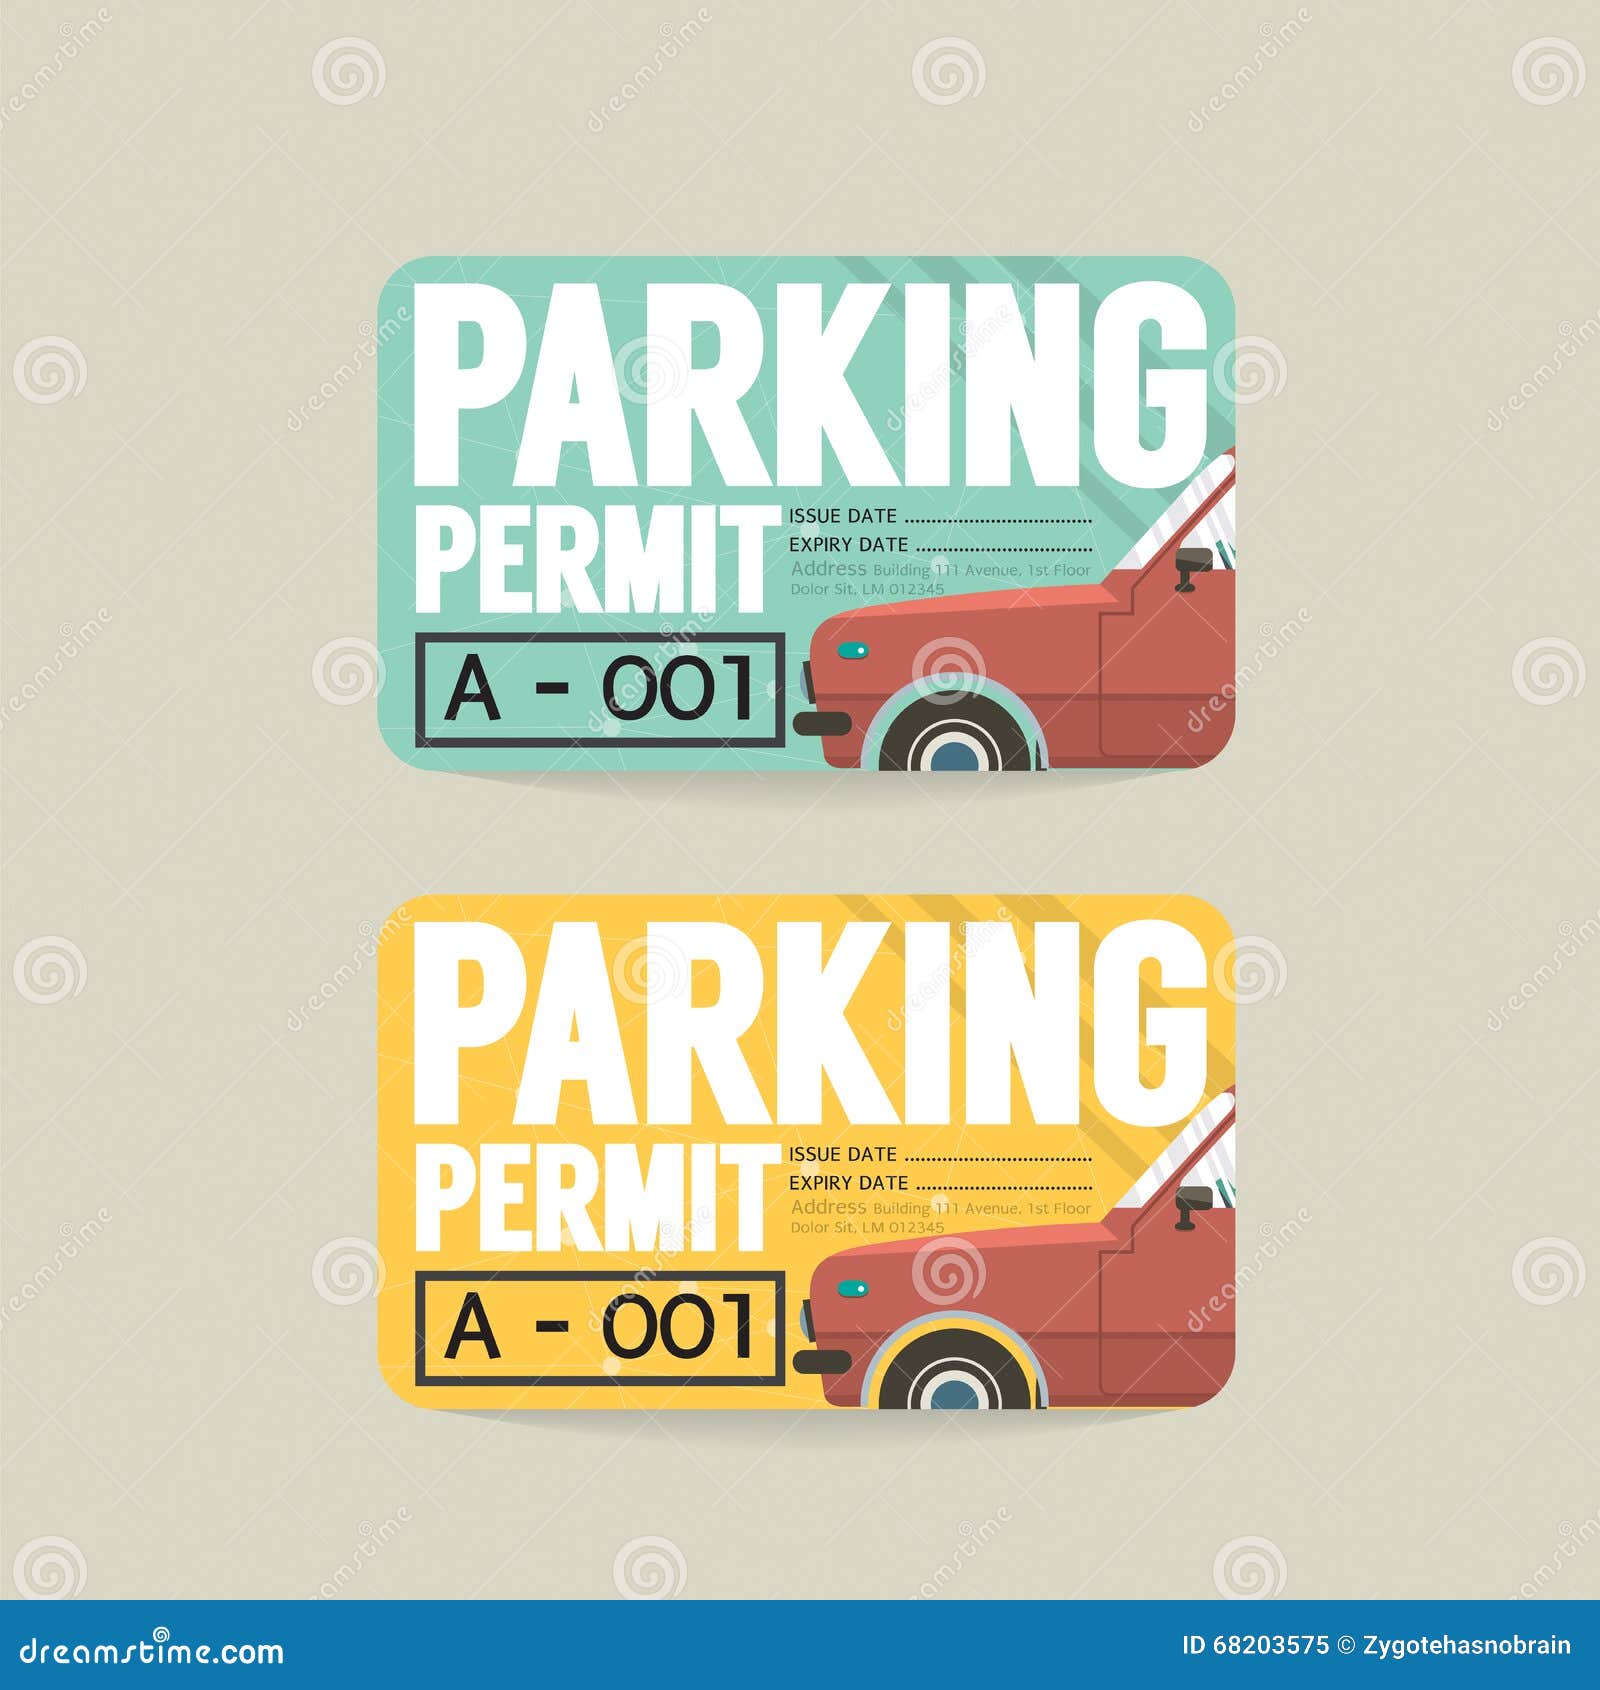 Fringe Parking Permit Vehicle ID 